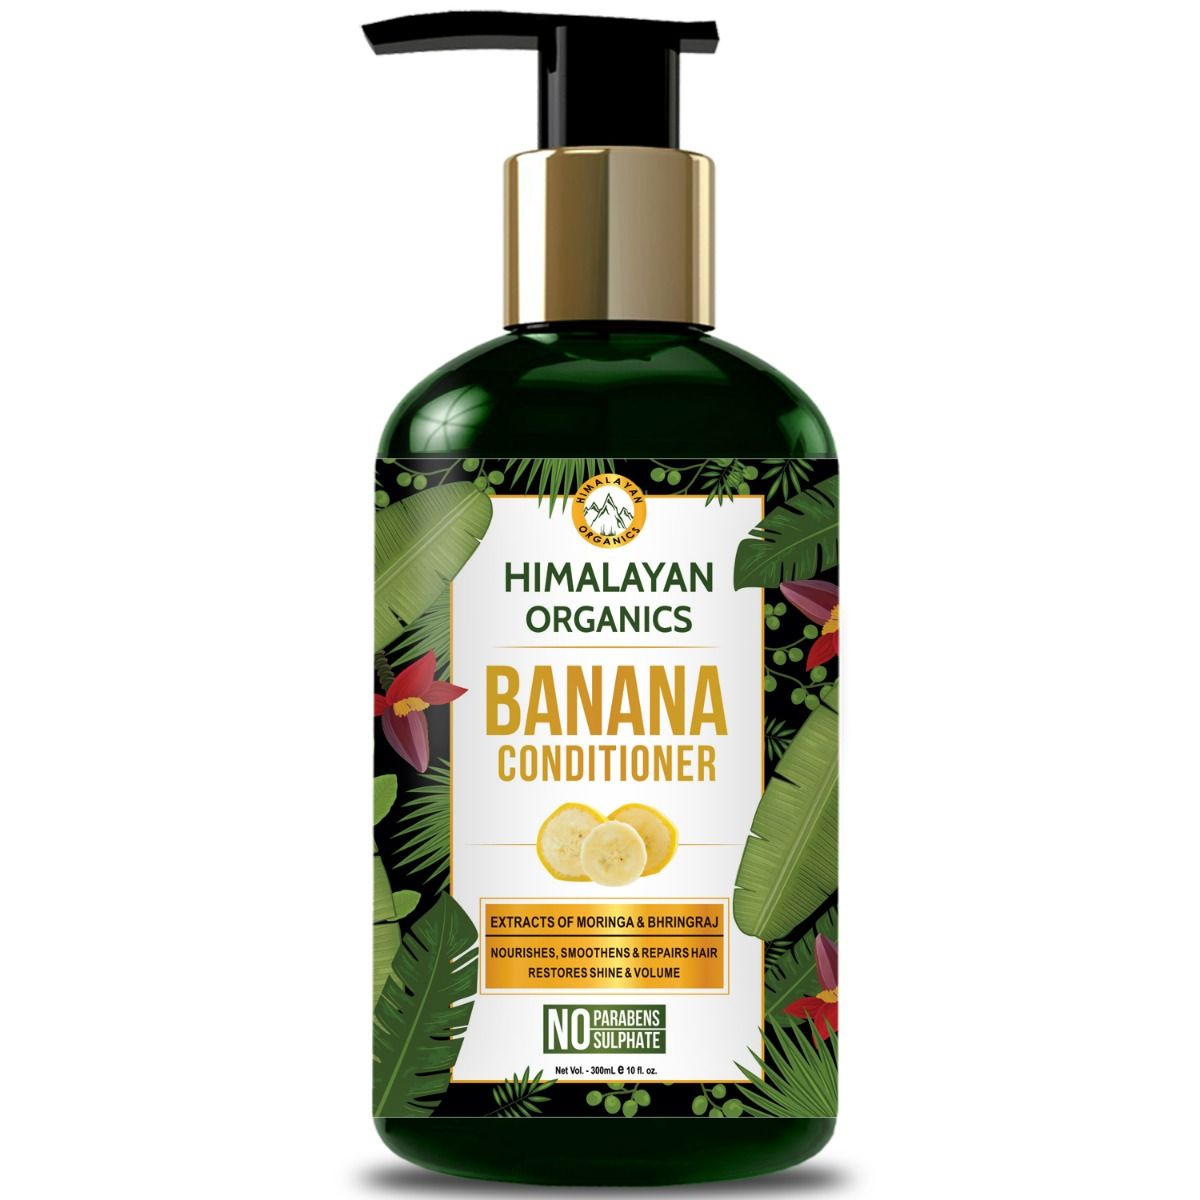 Buy Himalayan Organics Banana Conditioner, 300 ml Online